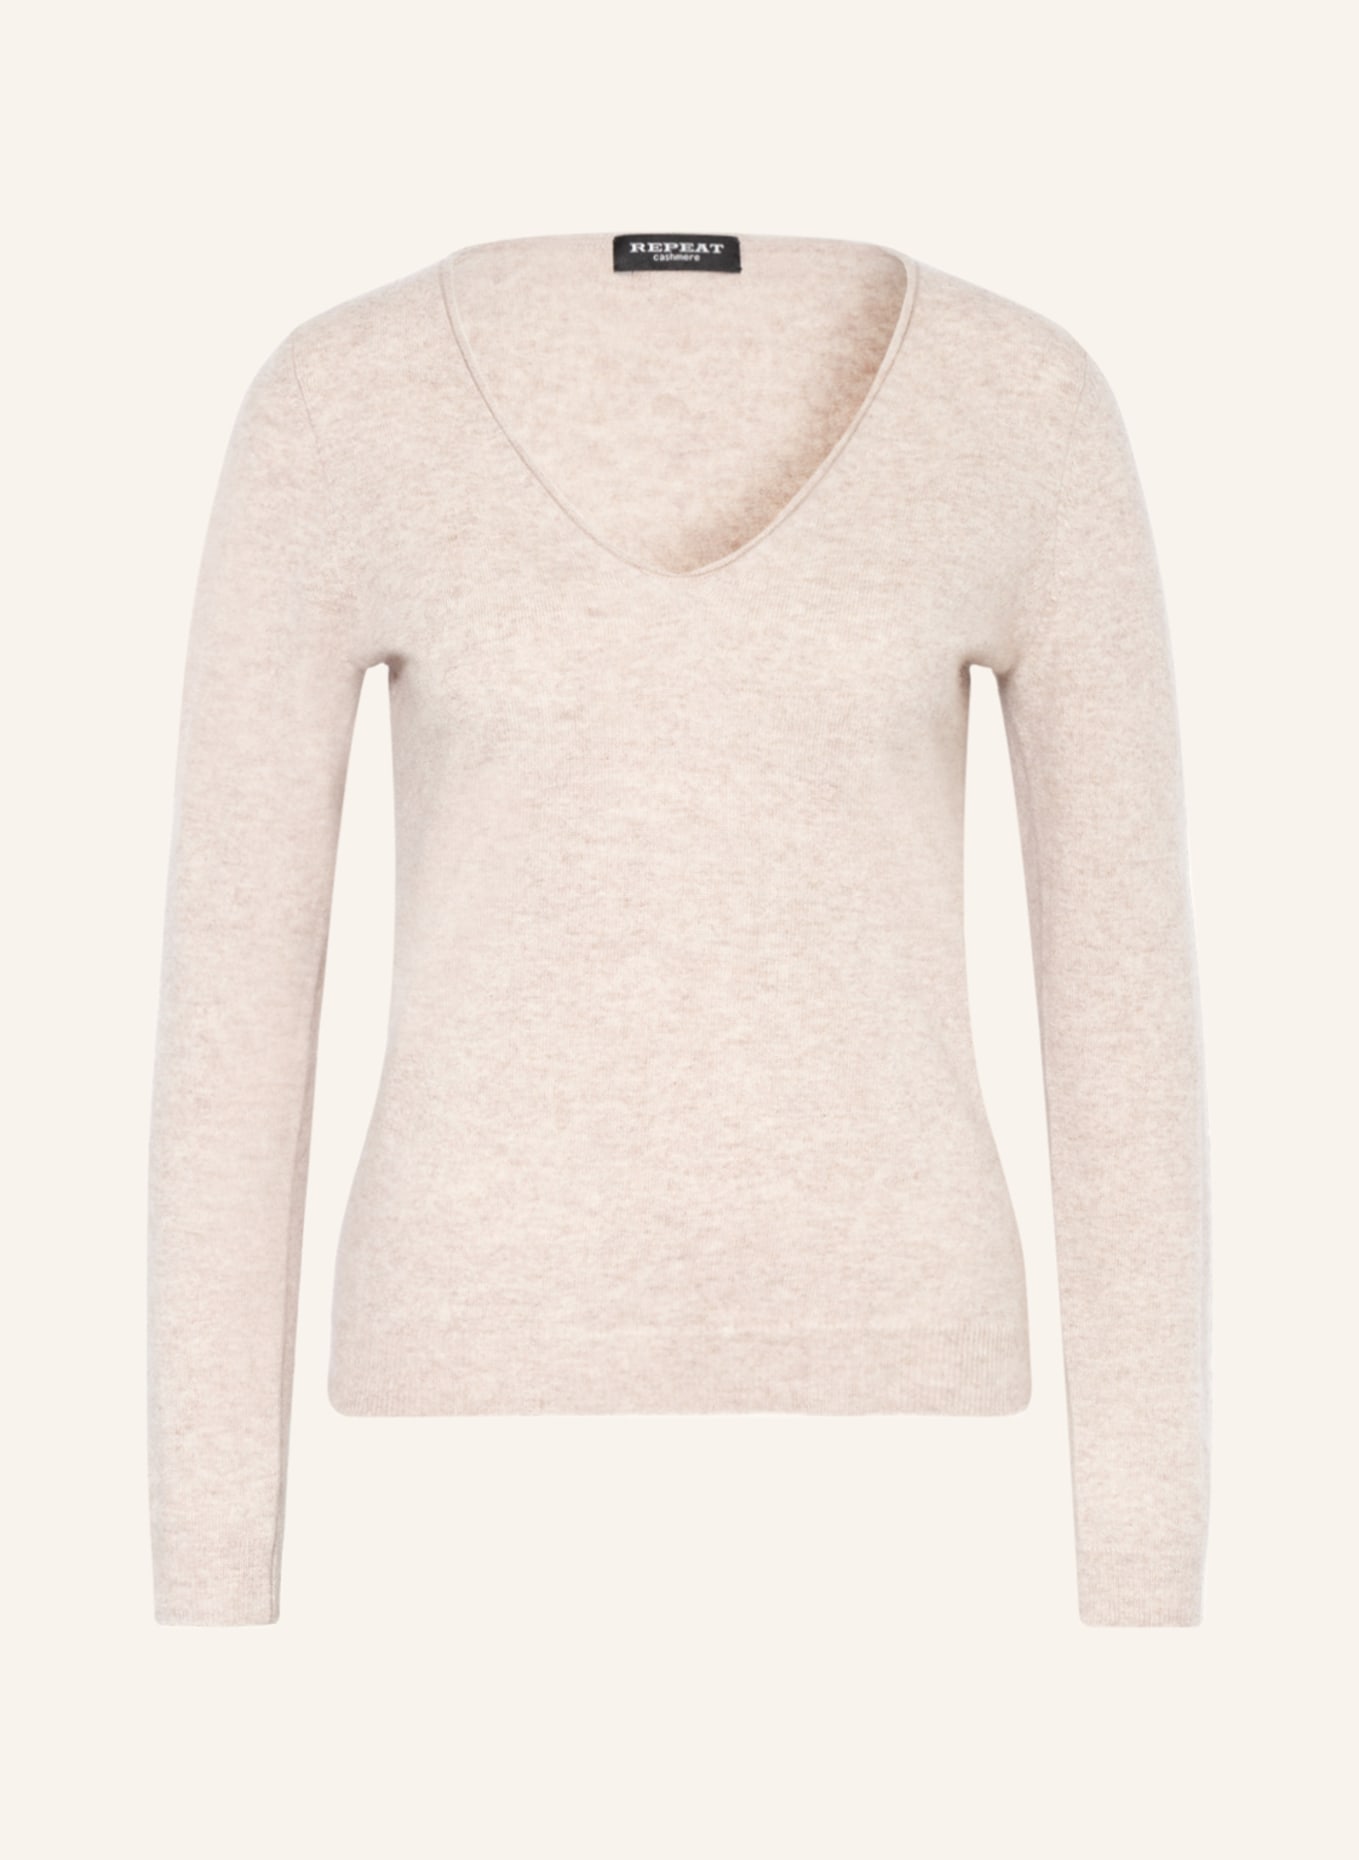 REPEAT Cashmere sweater, Color: CREAM (Image 1)